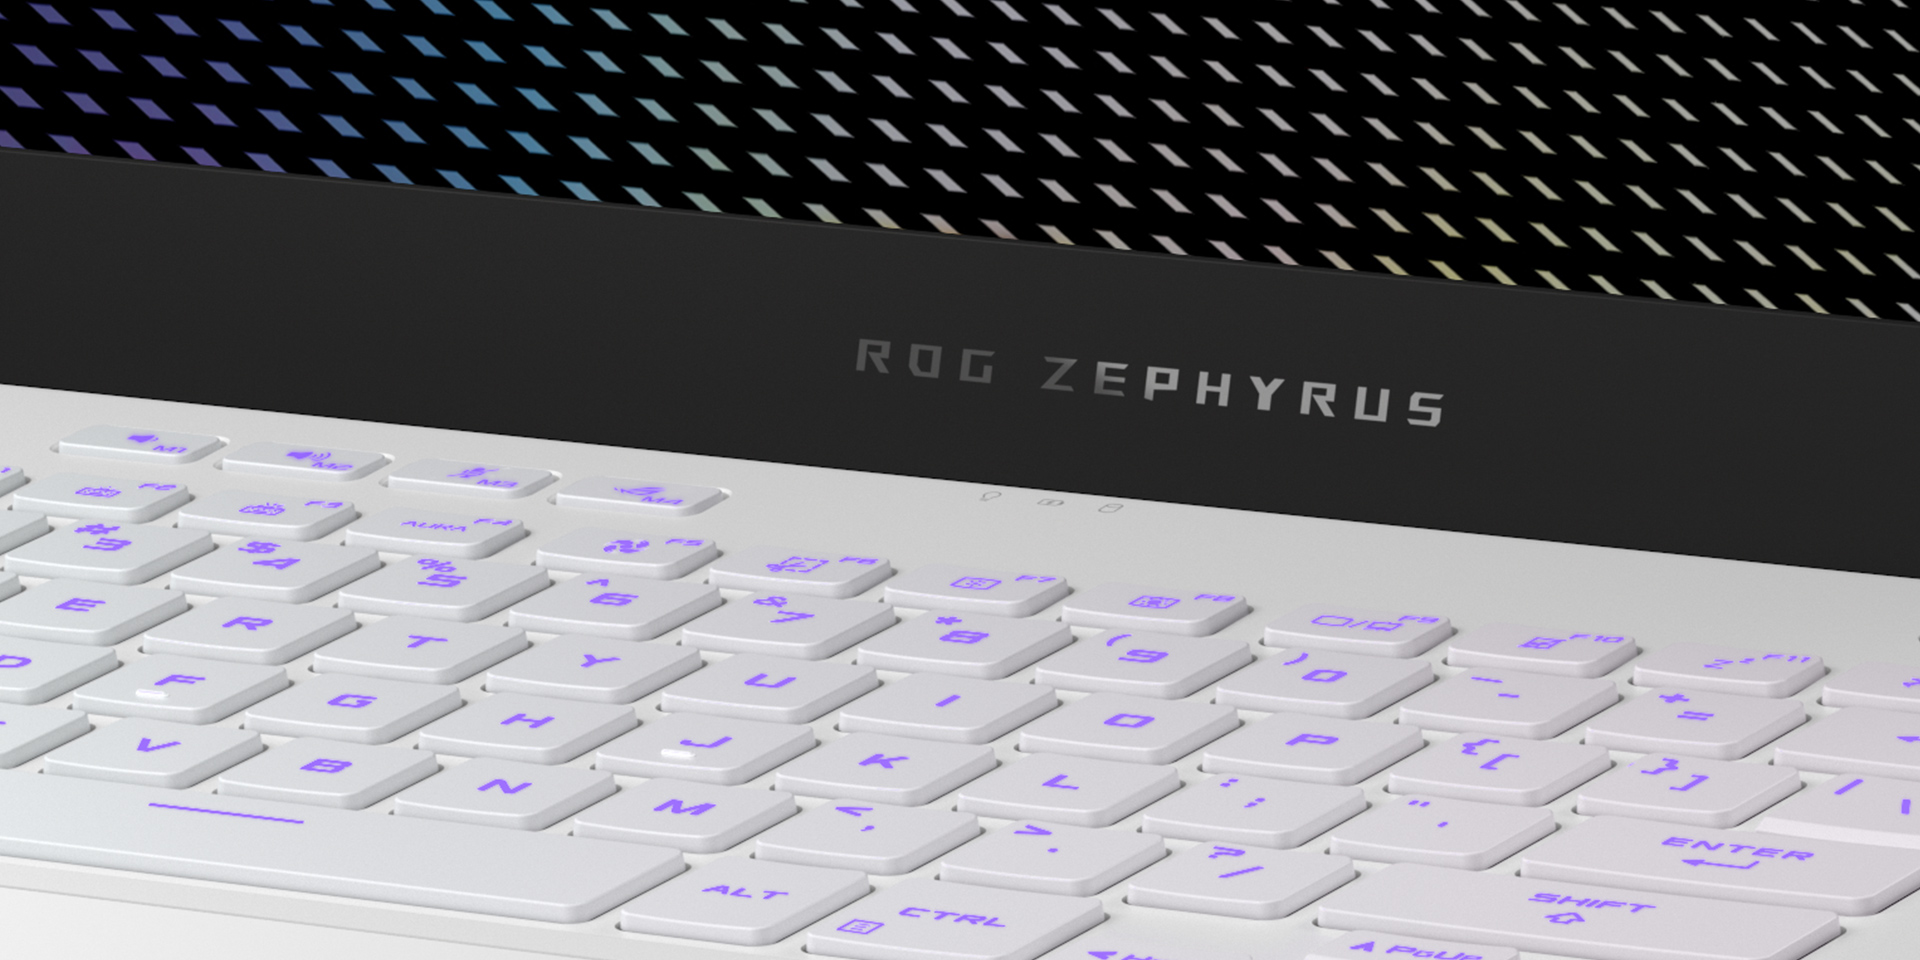 Image of Zephyrus G15 keyboard